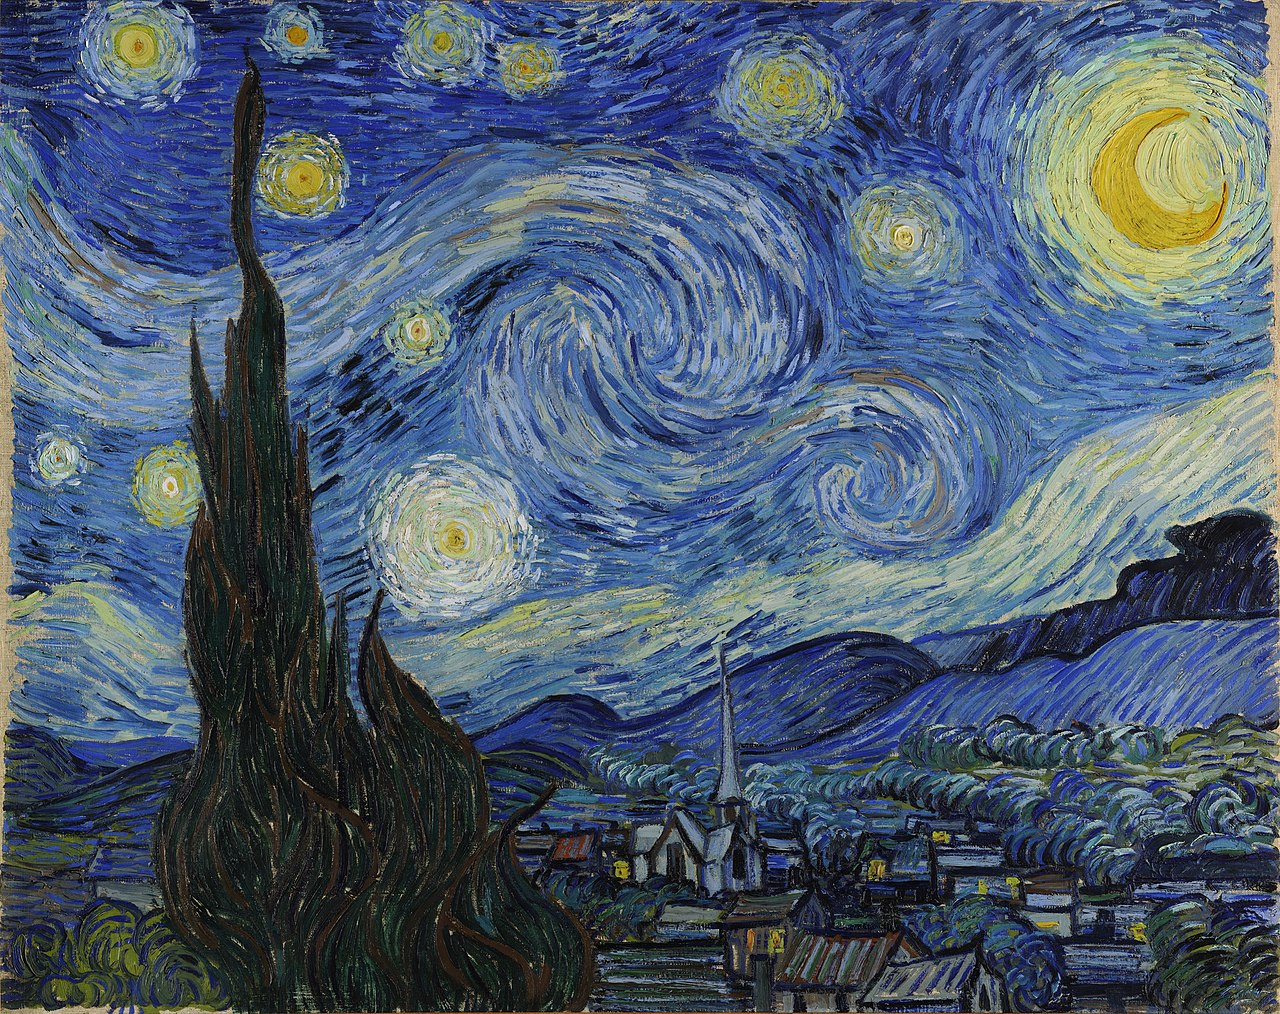 Sternennacht by Vincent van Gogh - 1889 - 73 x 92 cm Museum of Modern Art